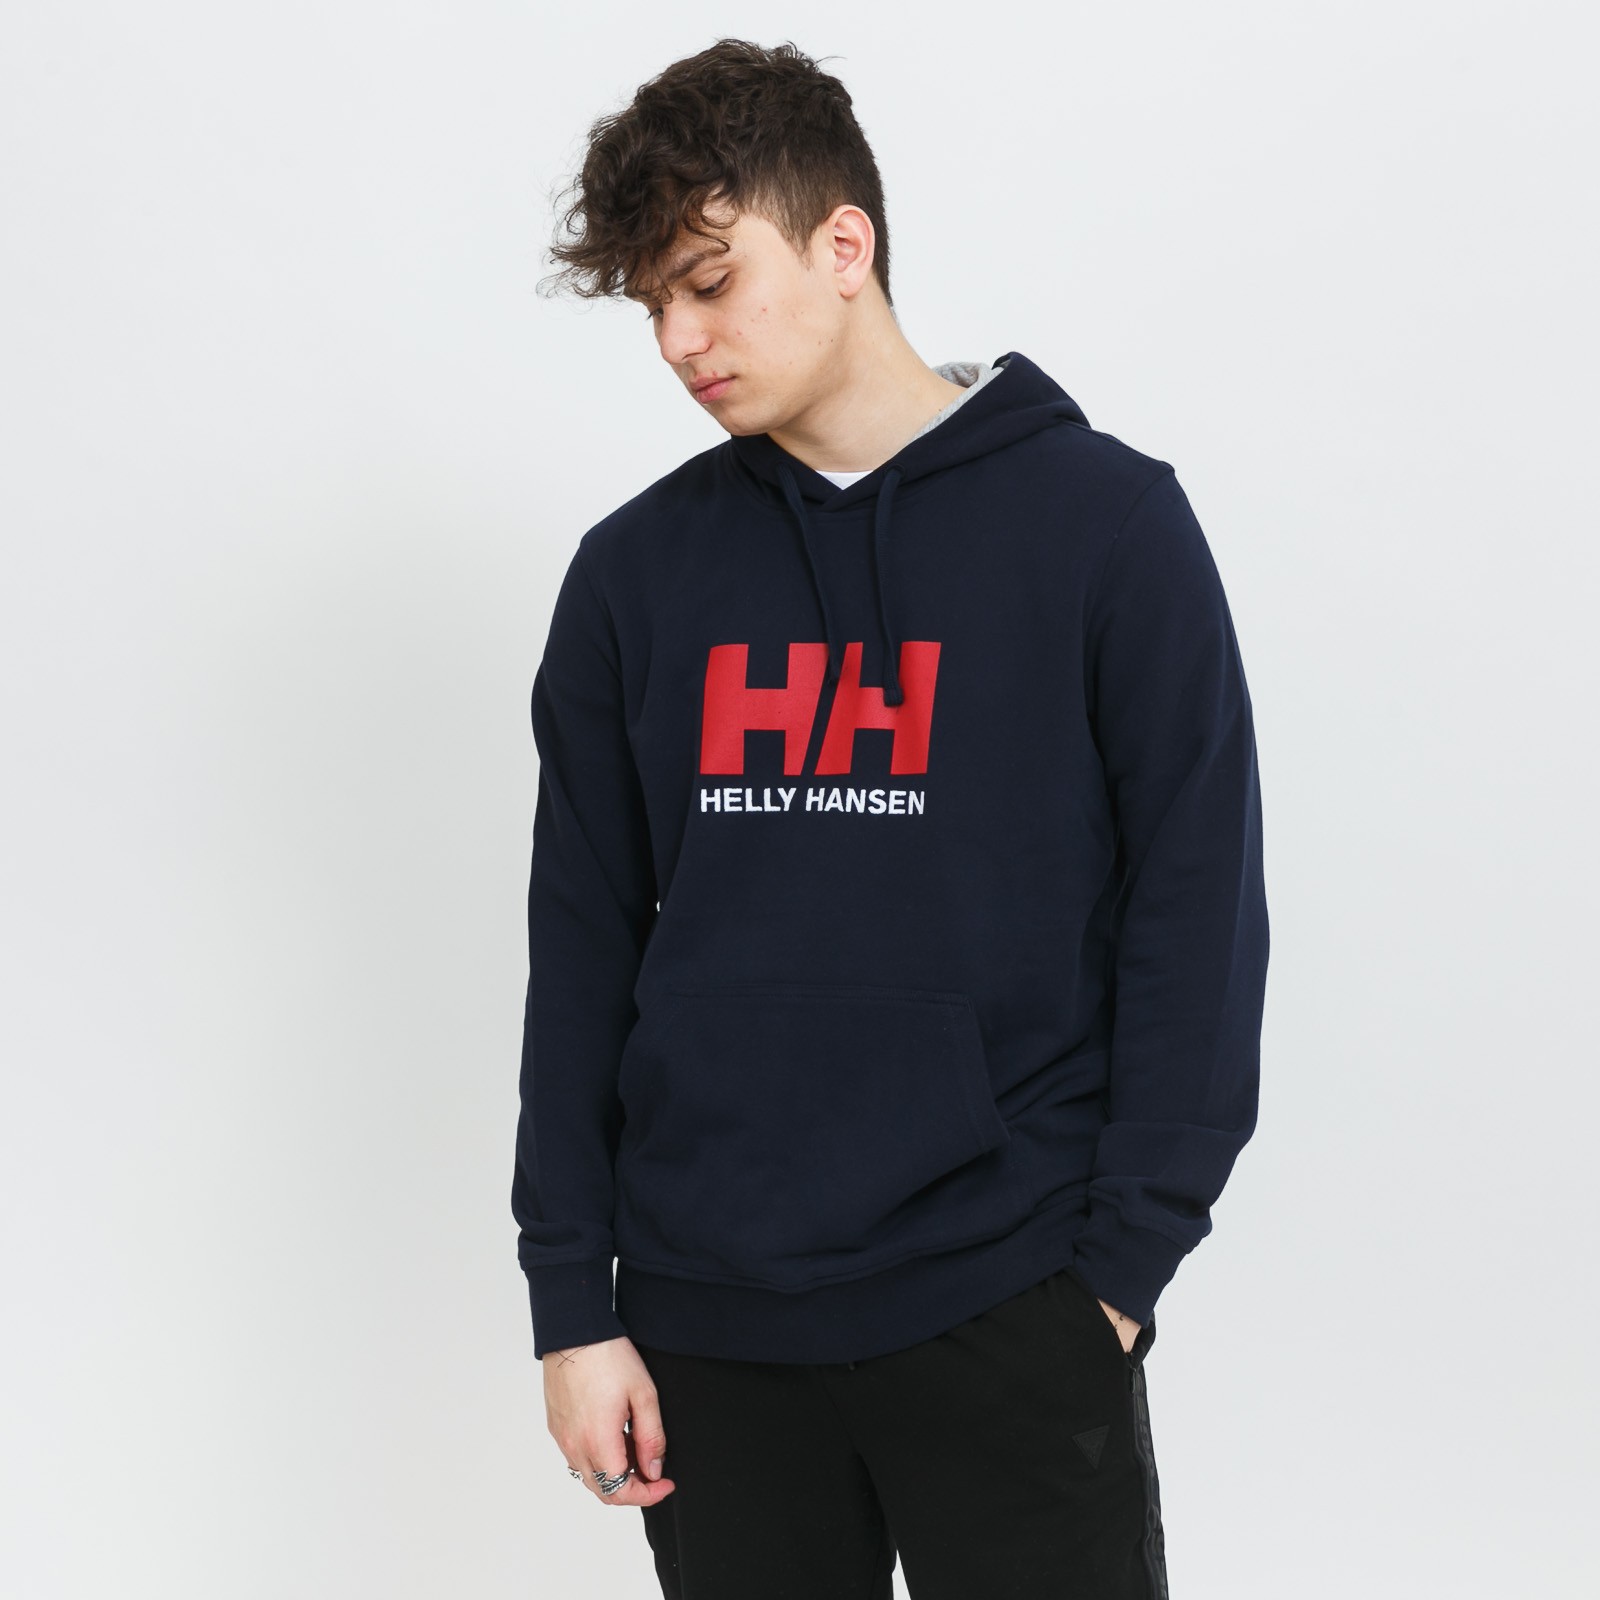 Levně Hh logo hoodie s